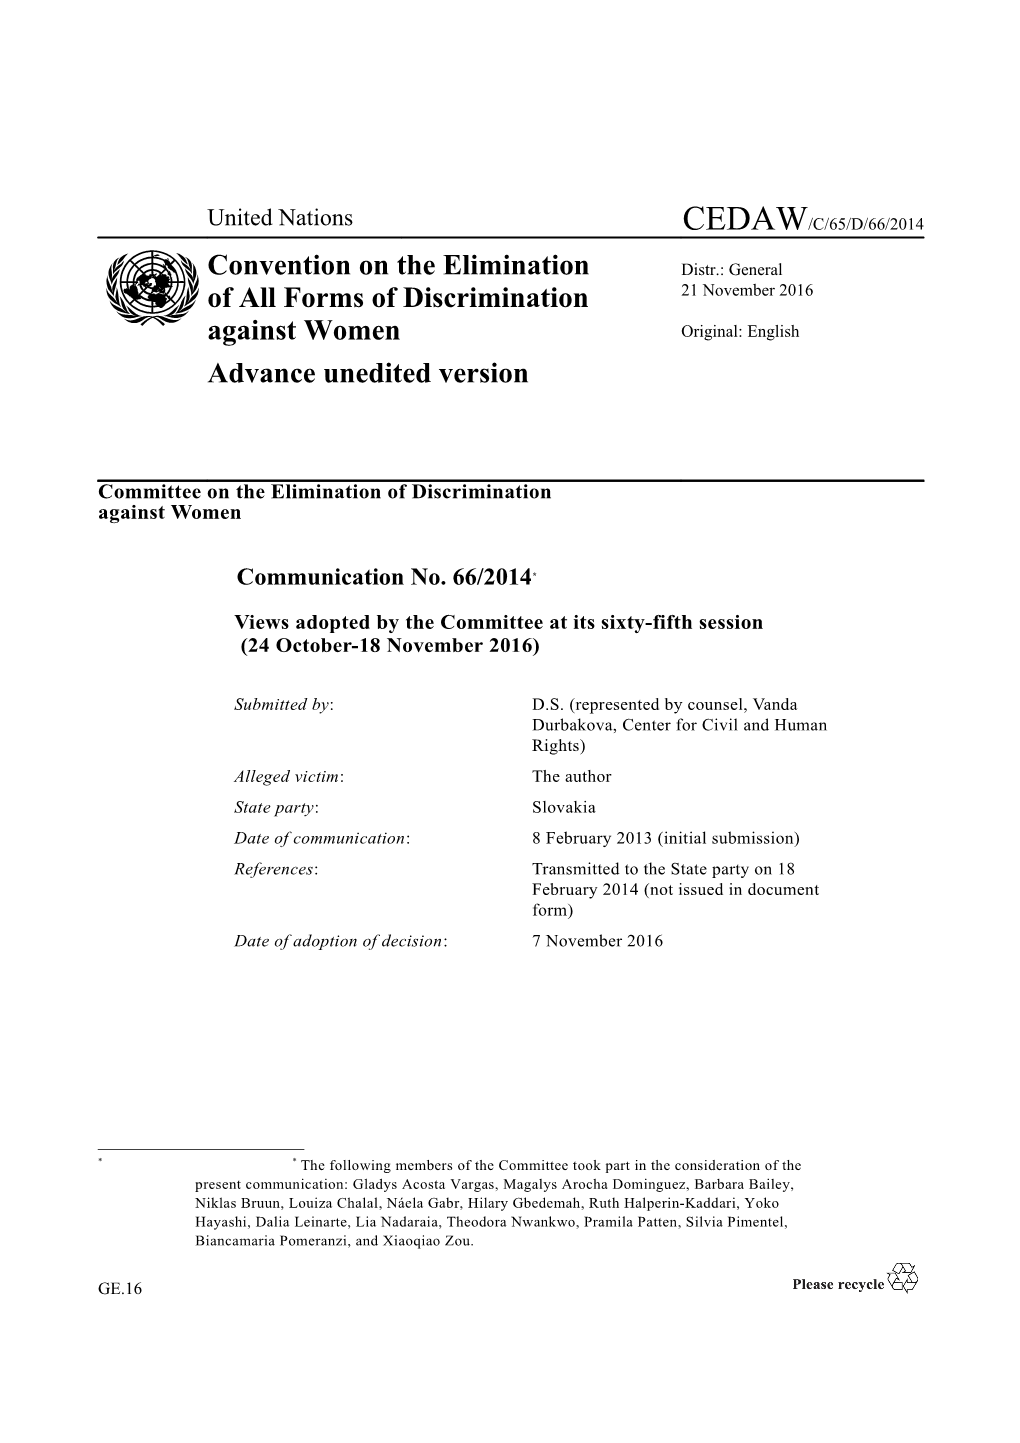 Advance Unedited Version CEDAW/C/65/D/66/2014